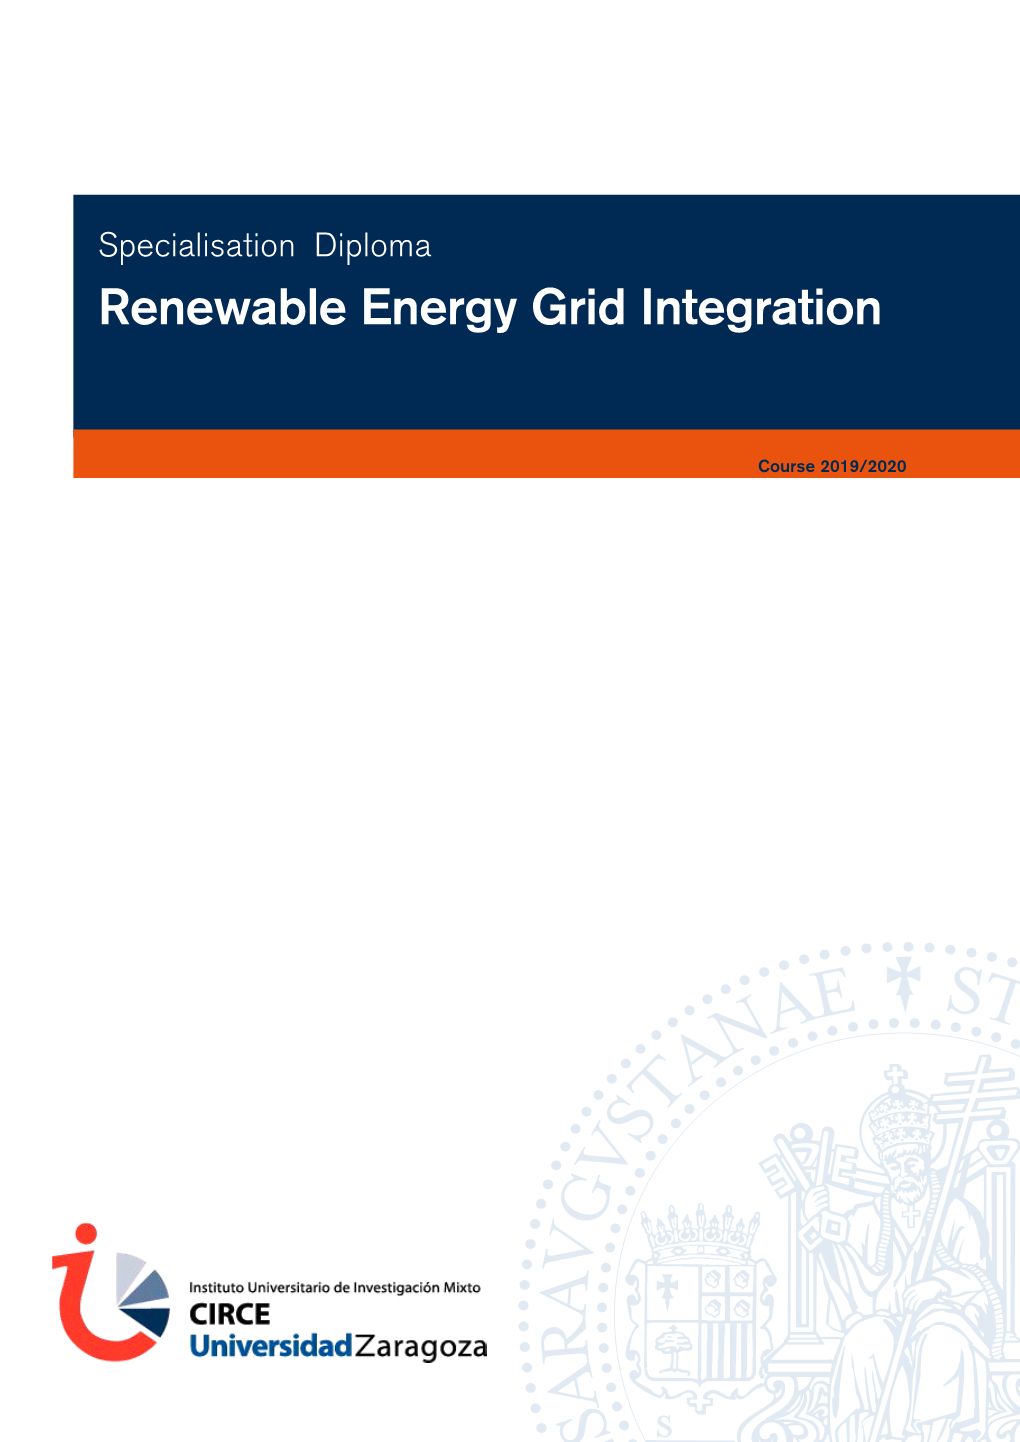 Renewable Energy Grid Integration